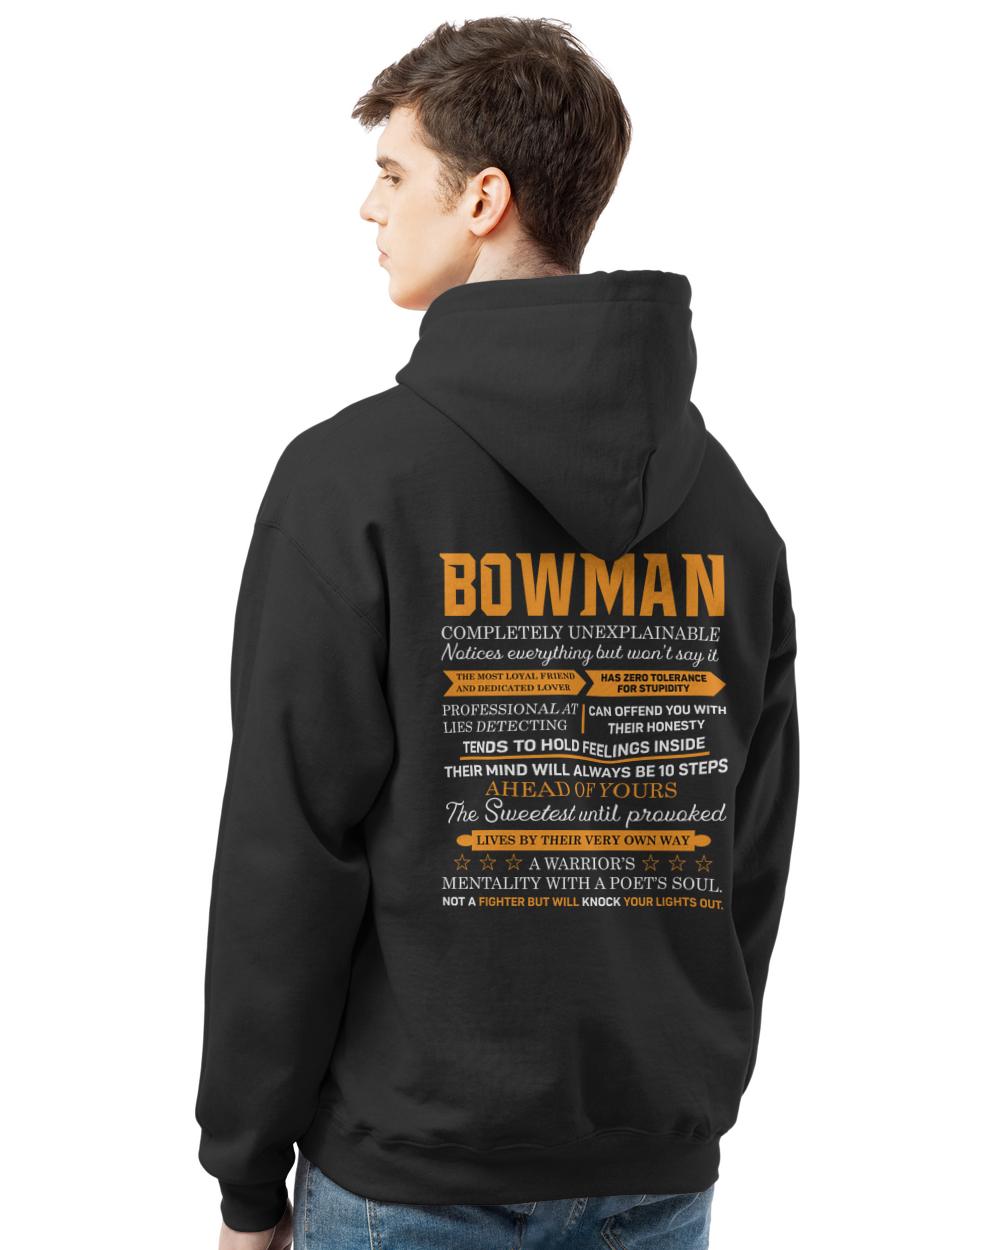 BOWMAN-13K-N1-01